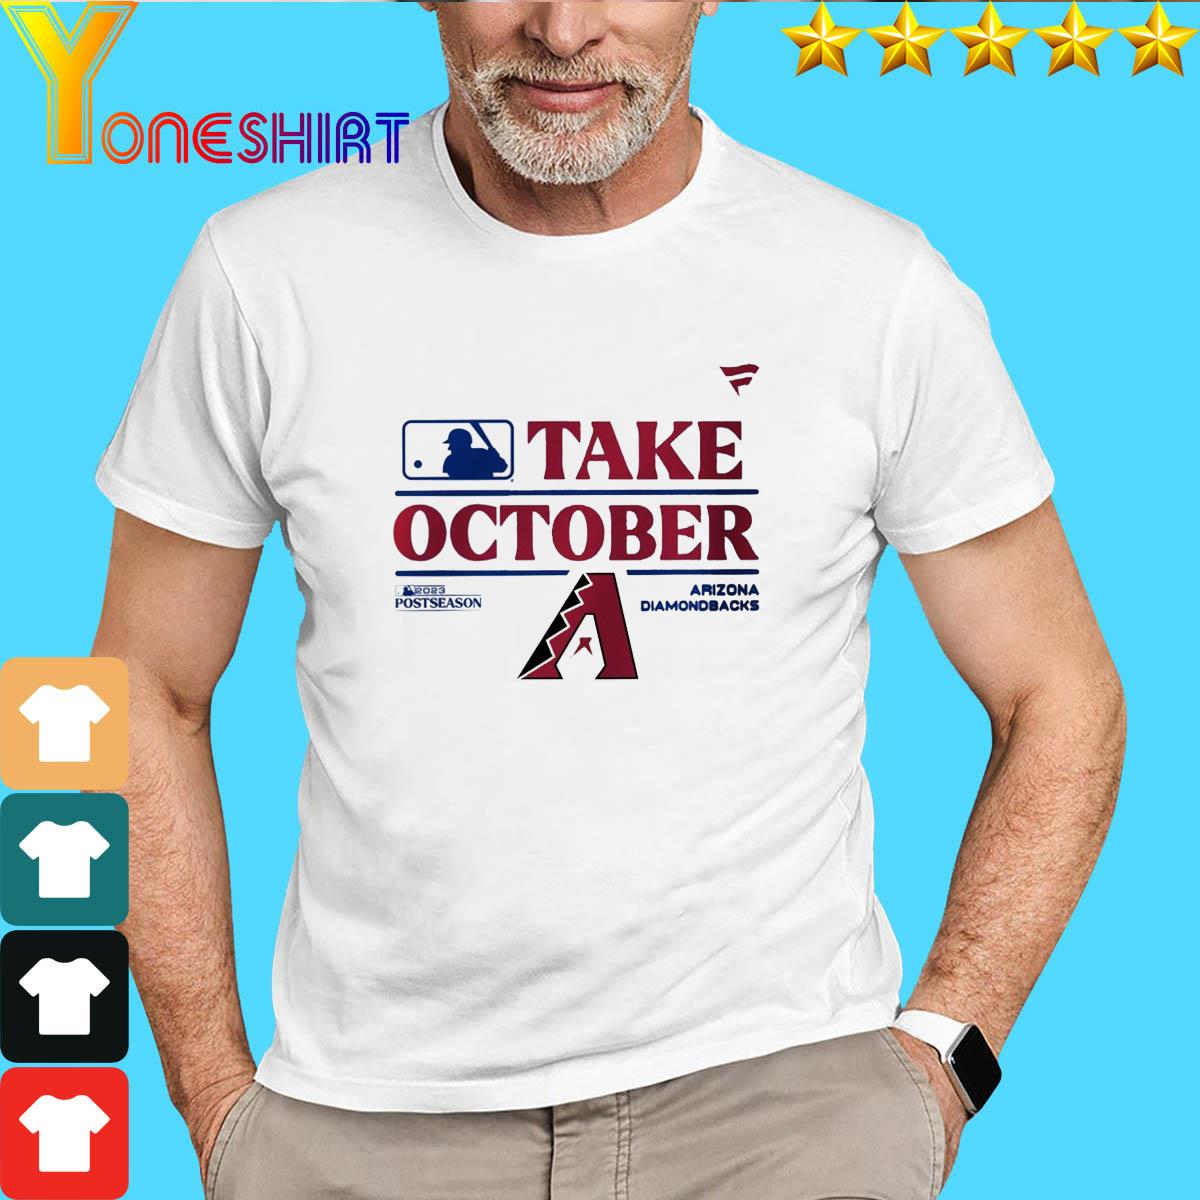 Mlb New York Yankees Take October 2023 Postseason Shirt by Macoroo